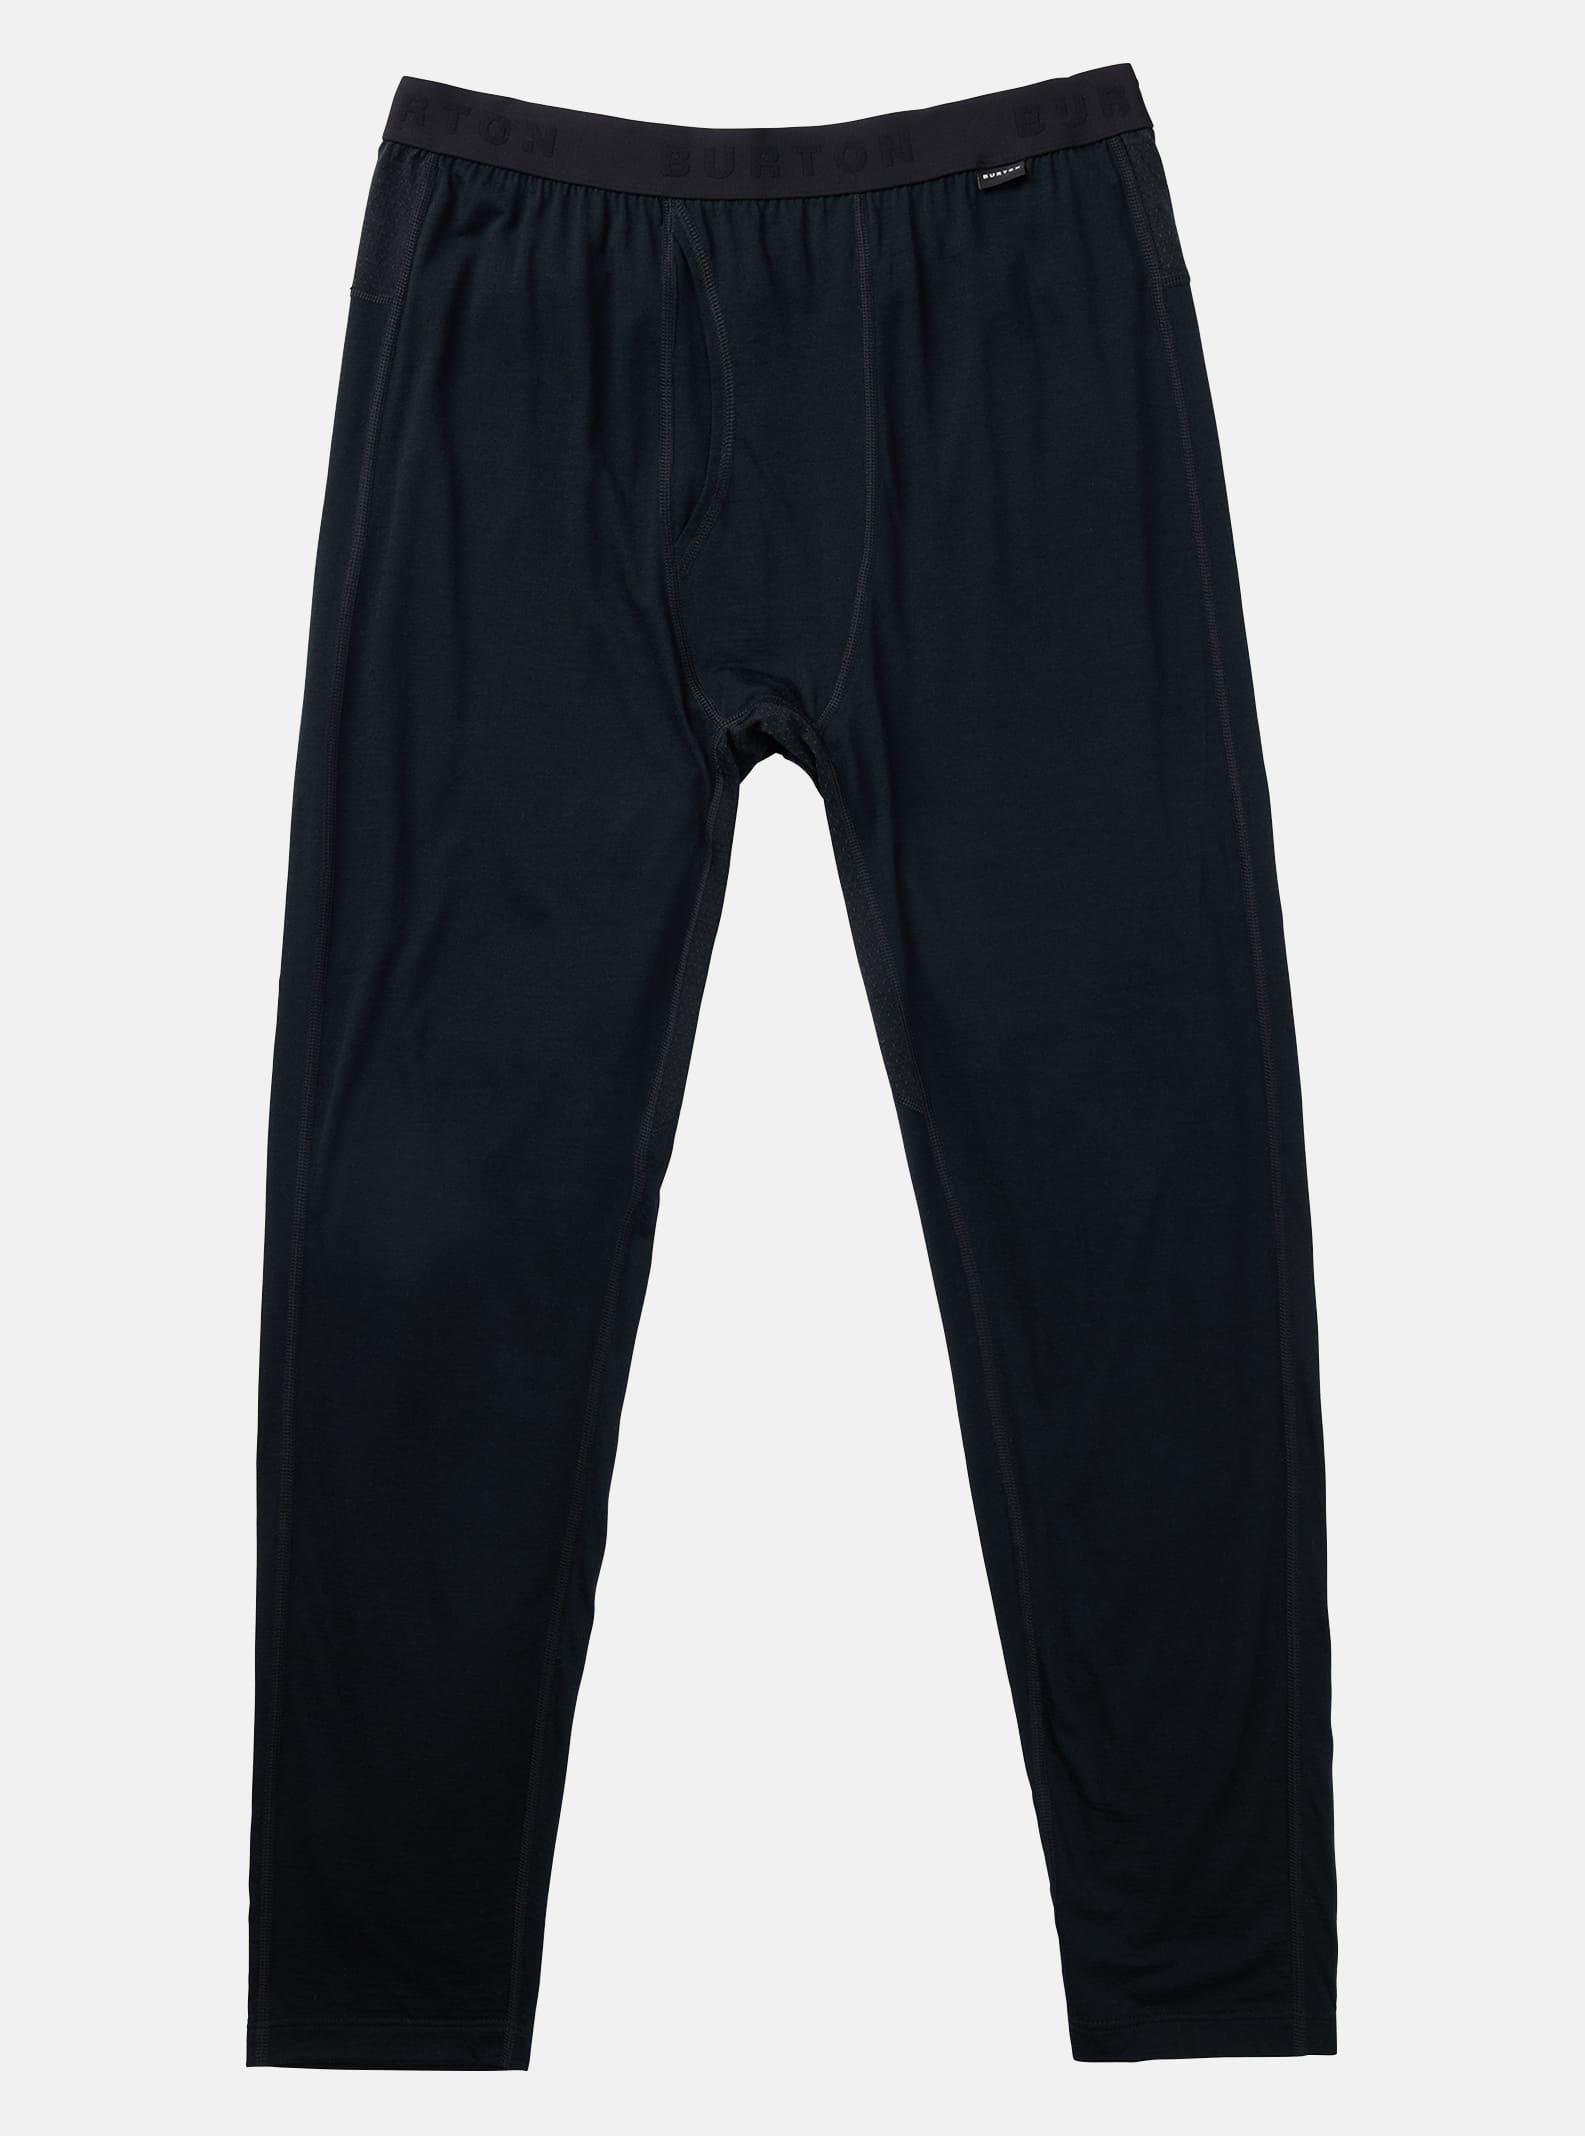 Burton Men's Phayse Merino Base Layer Pants, True Black, L